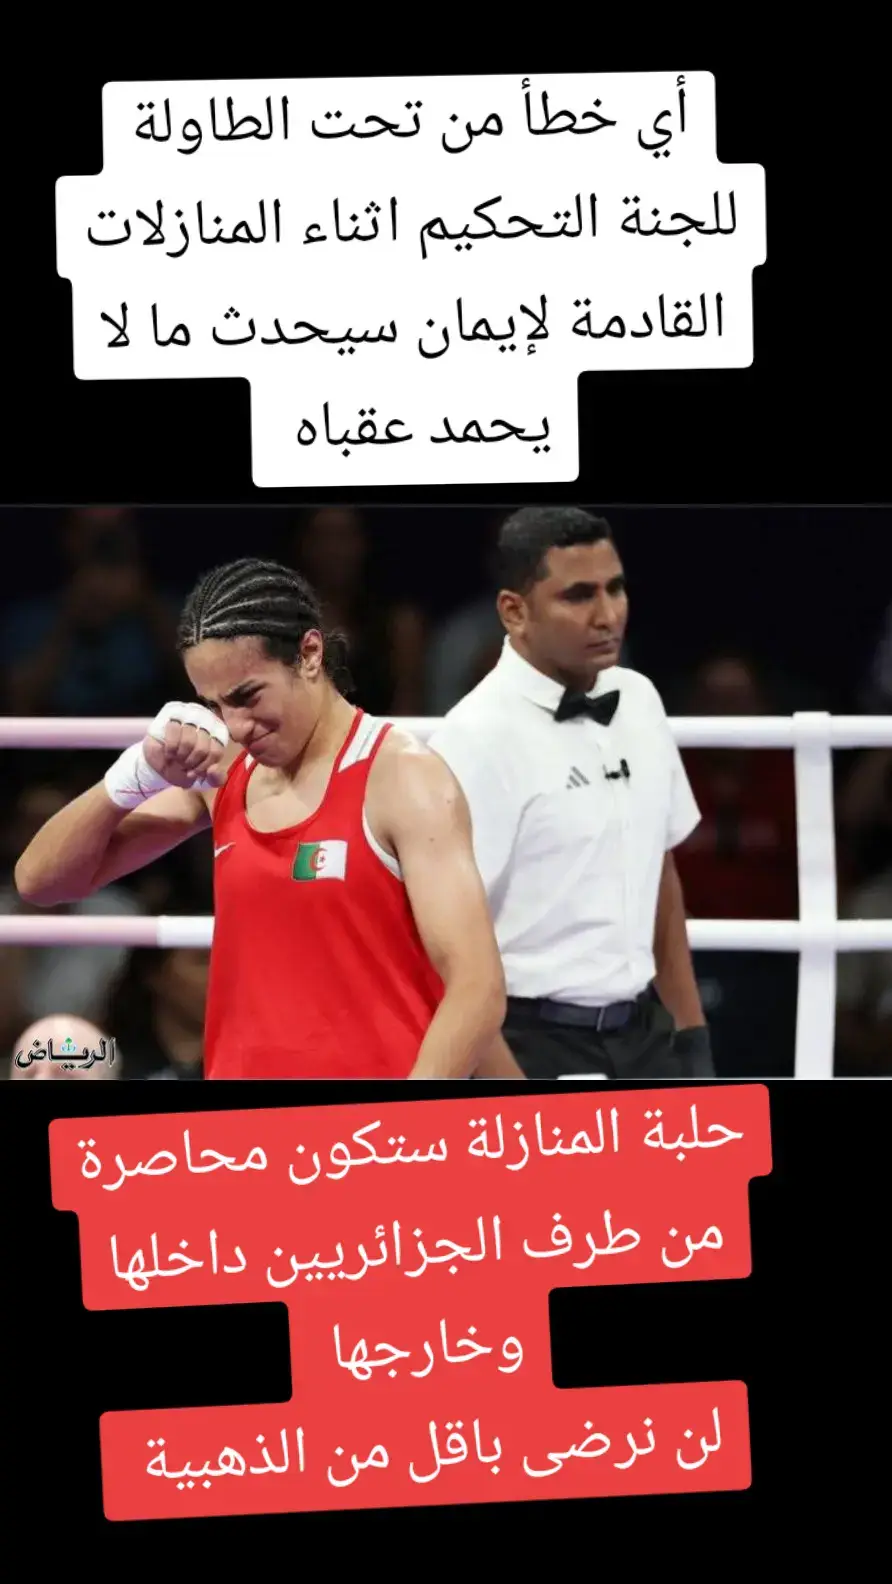 #boxing #box #sports #sports #sportsontiktok #algerie #europe #footballtiktok #france #algeria #europe #fyppppppppppppppppppppppp #jeuxolympiques #flypシ #france 